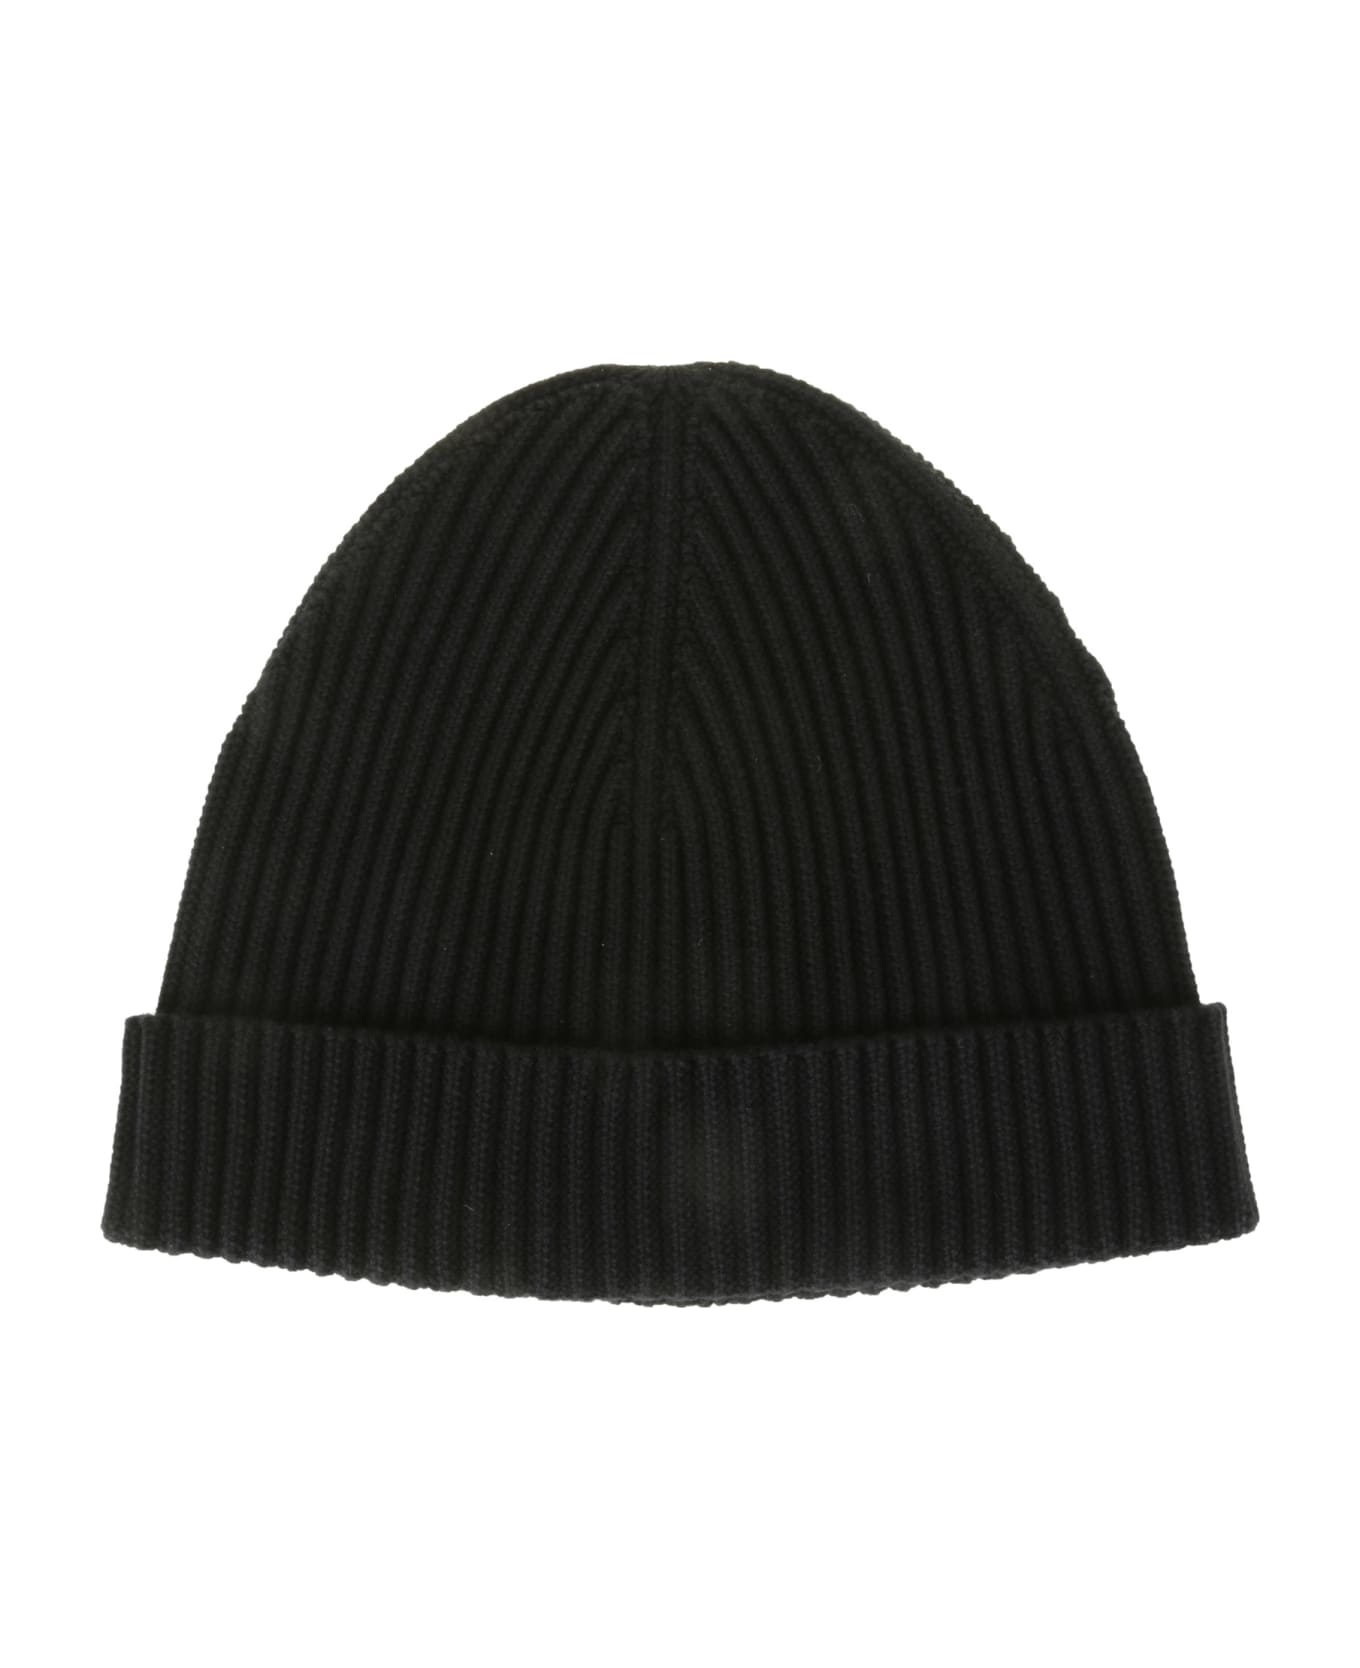 RRD - Roberto Ricci Design Cap Cotton Rib - Black 帽子